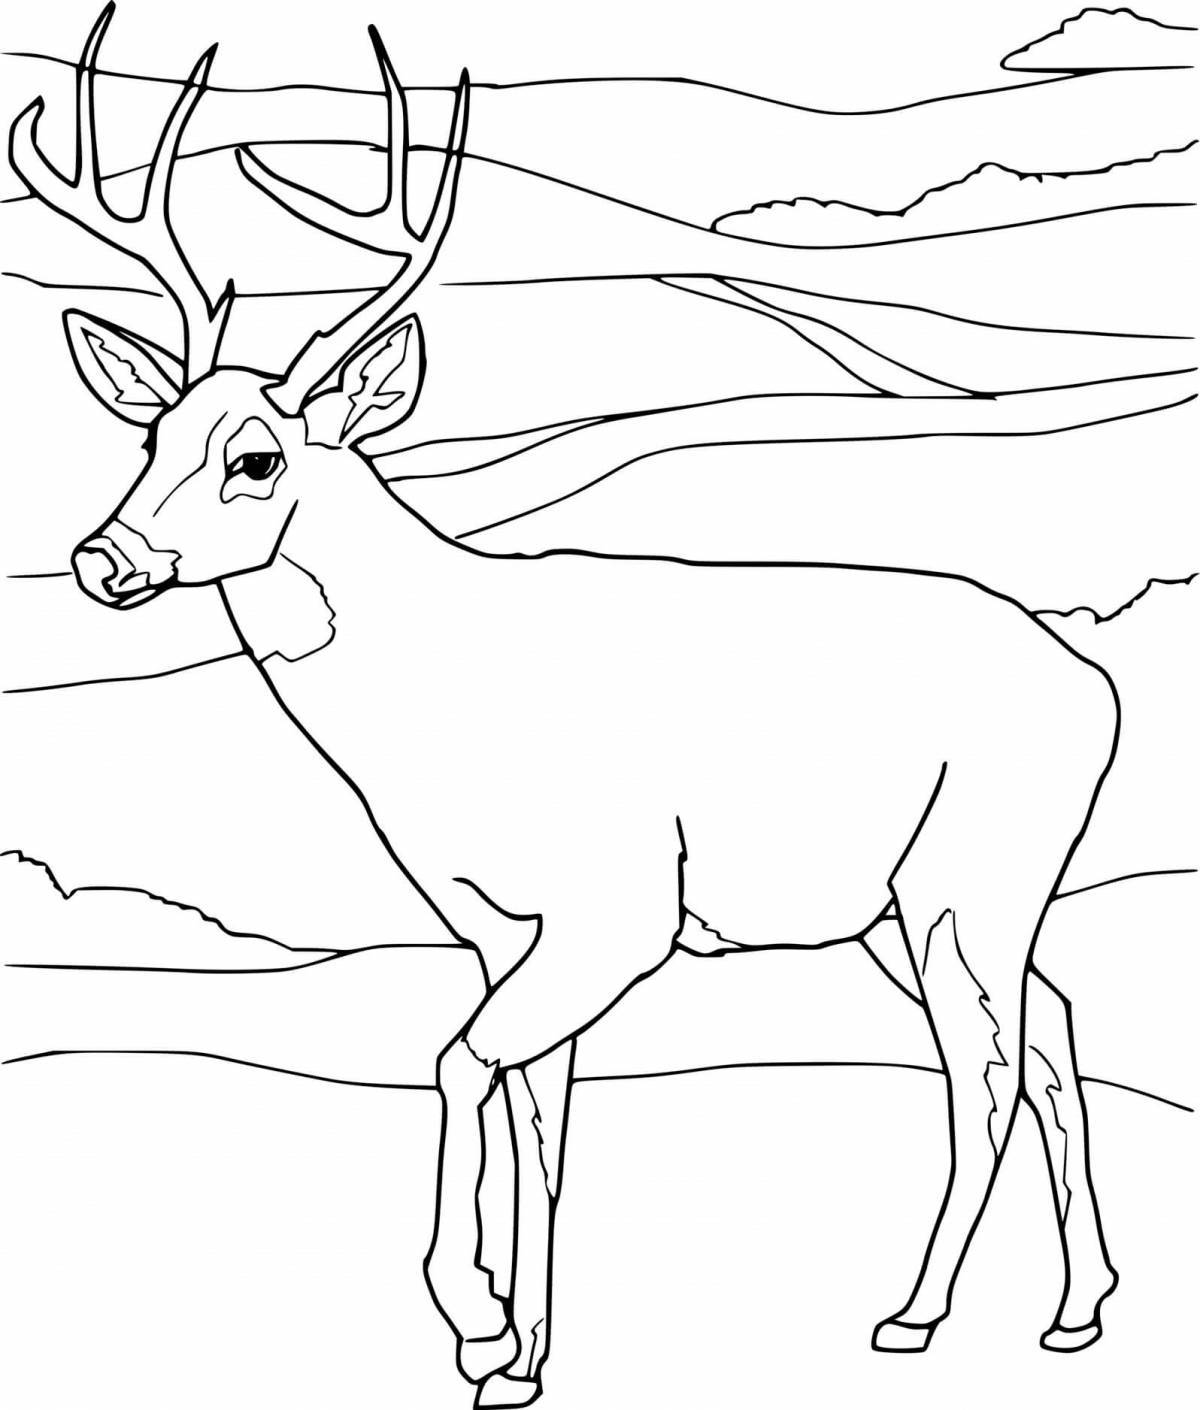 Exquisite deer coloring book for kids